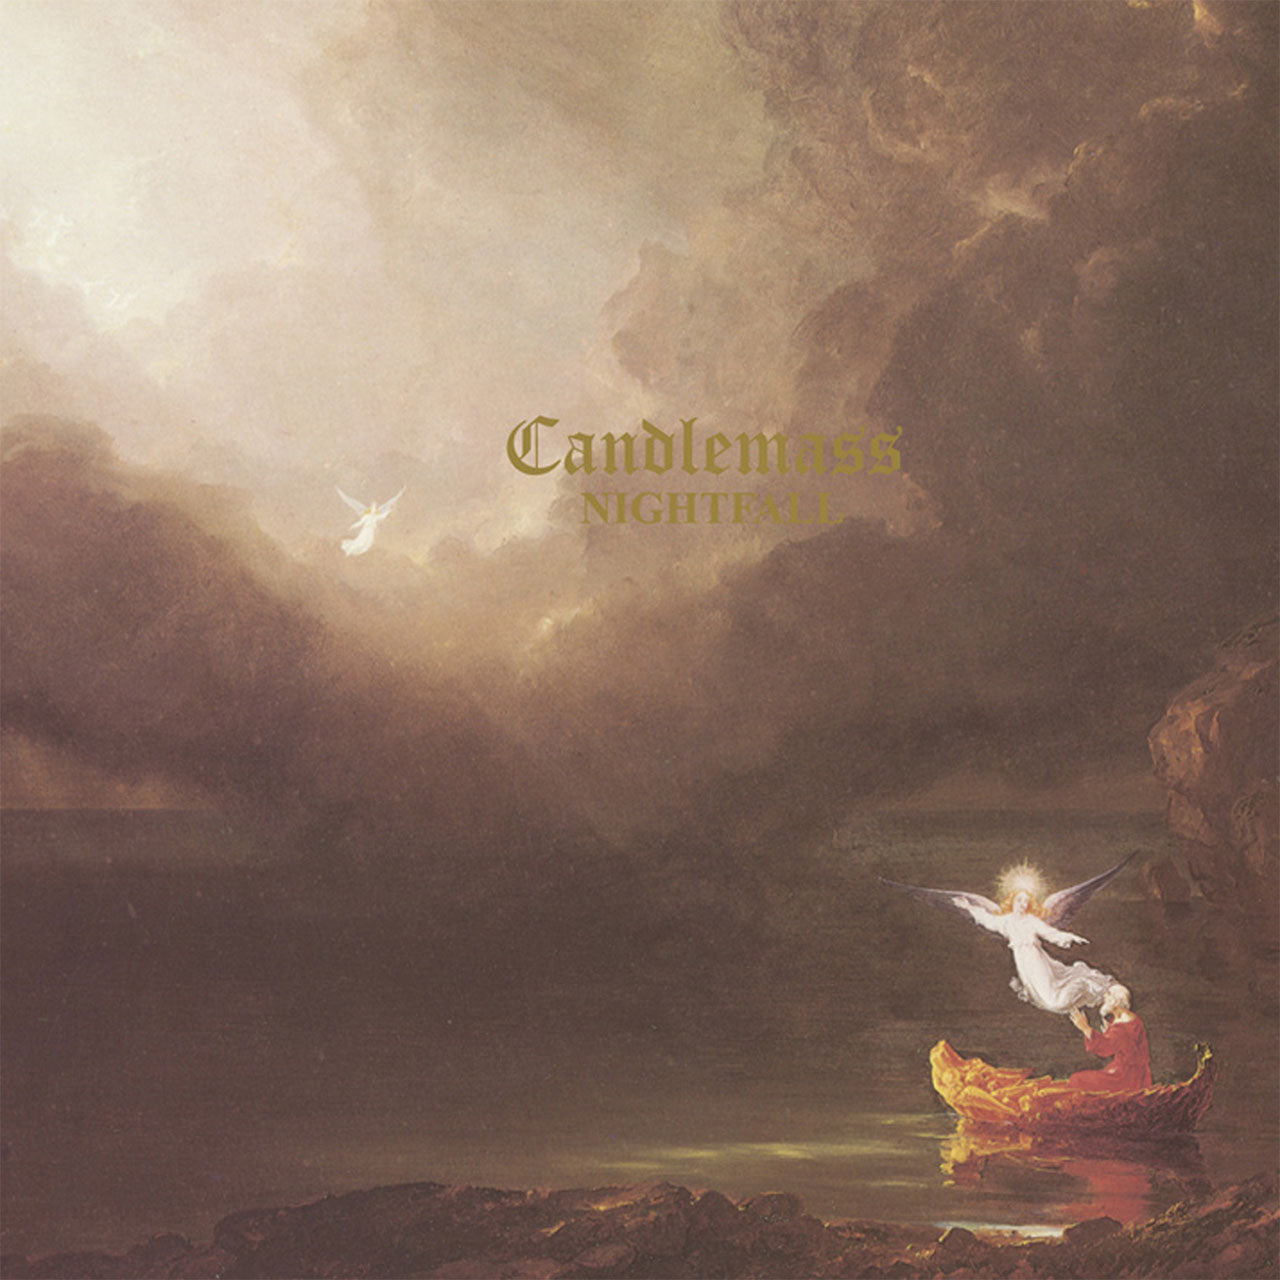 Candlemass - Nightfall (2019 Reissue) (Digipak CD)